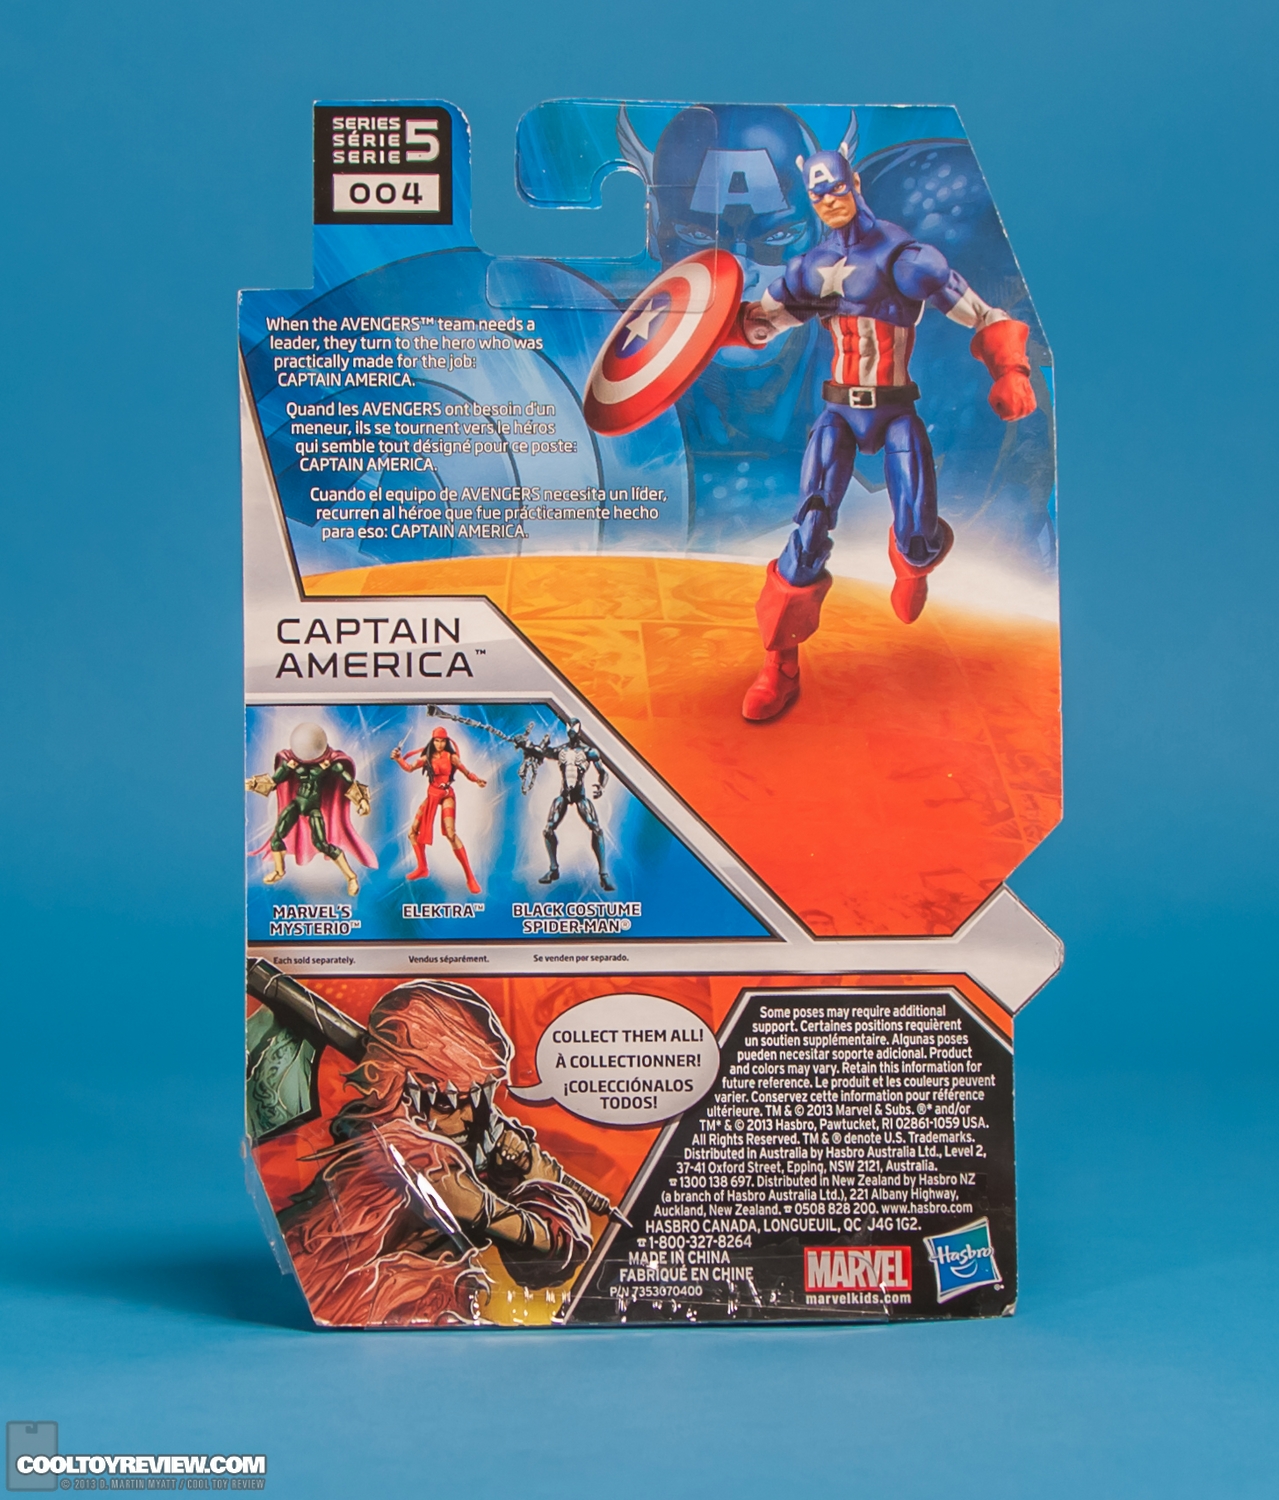 Series-5-04-Captain-America-Marvel-Universe-Hasbro-2013-014.jpg